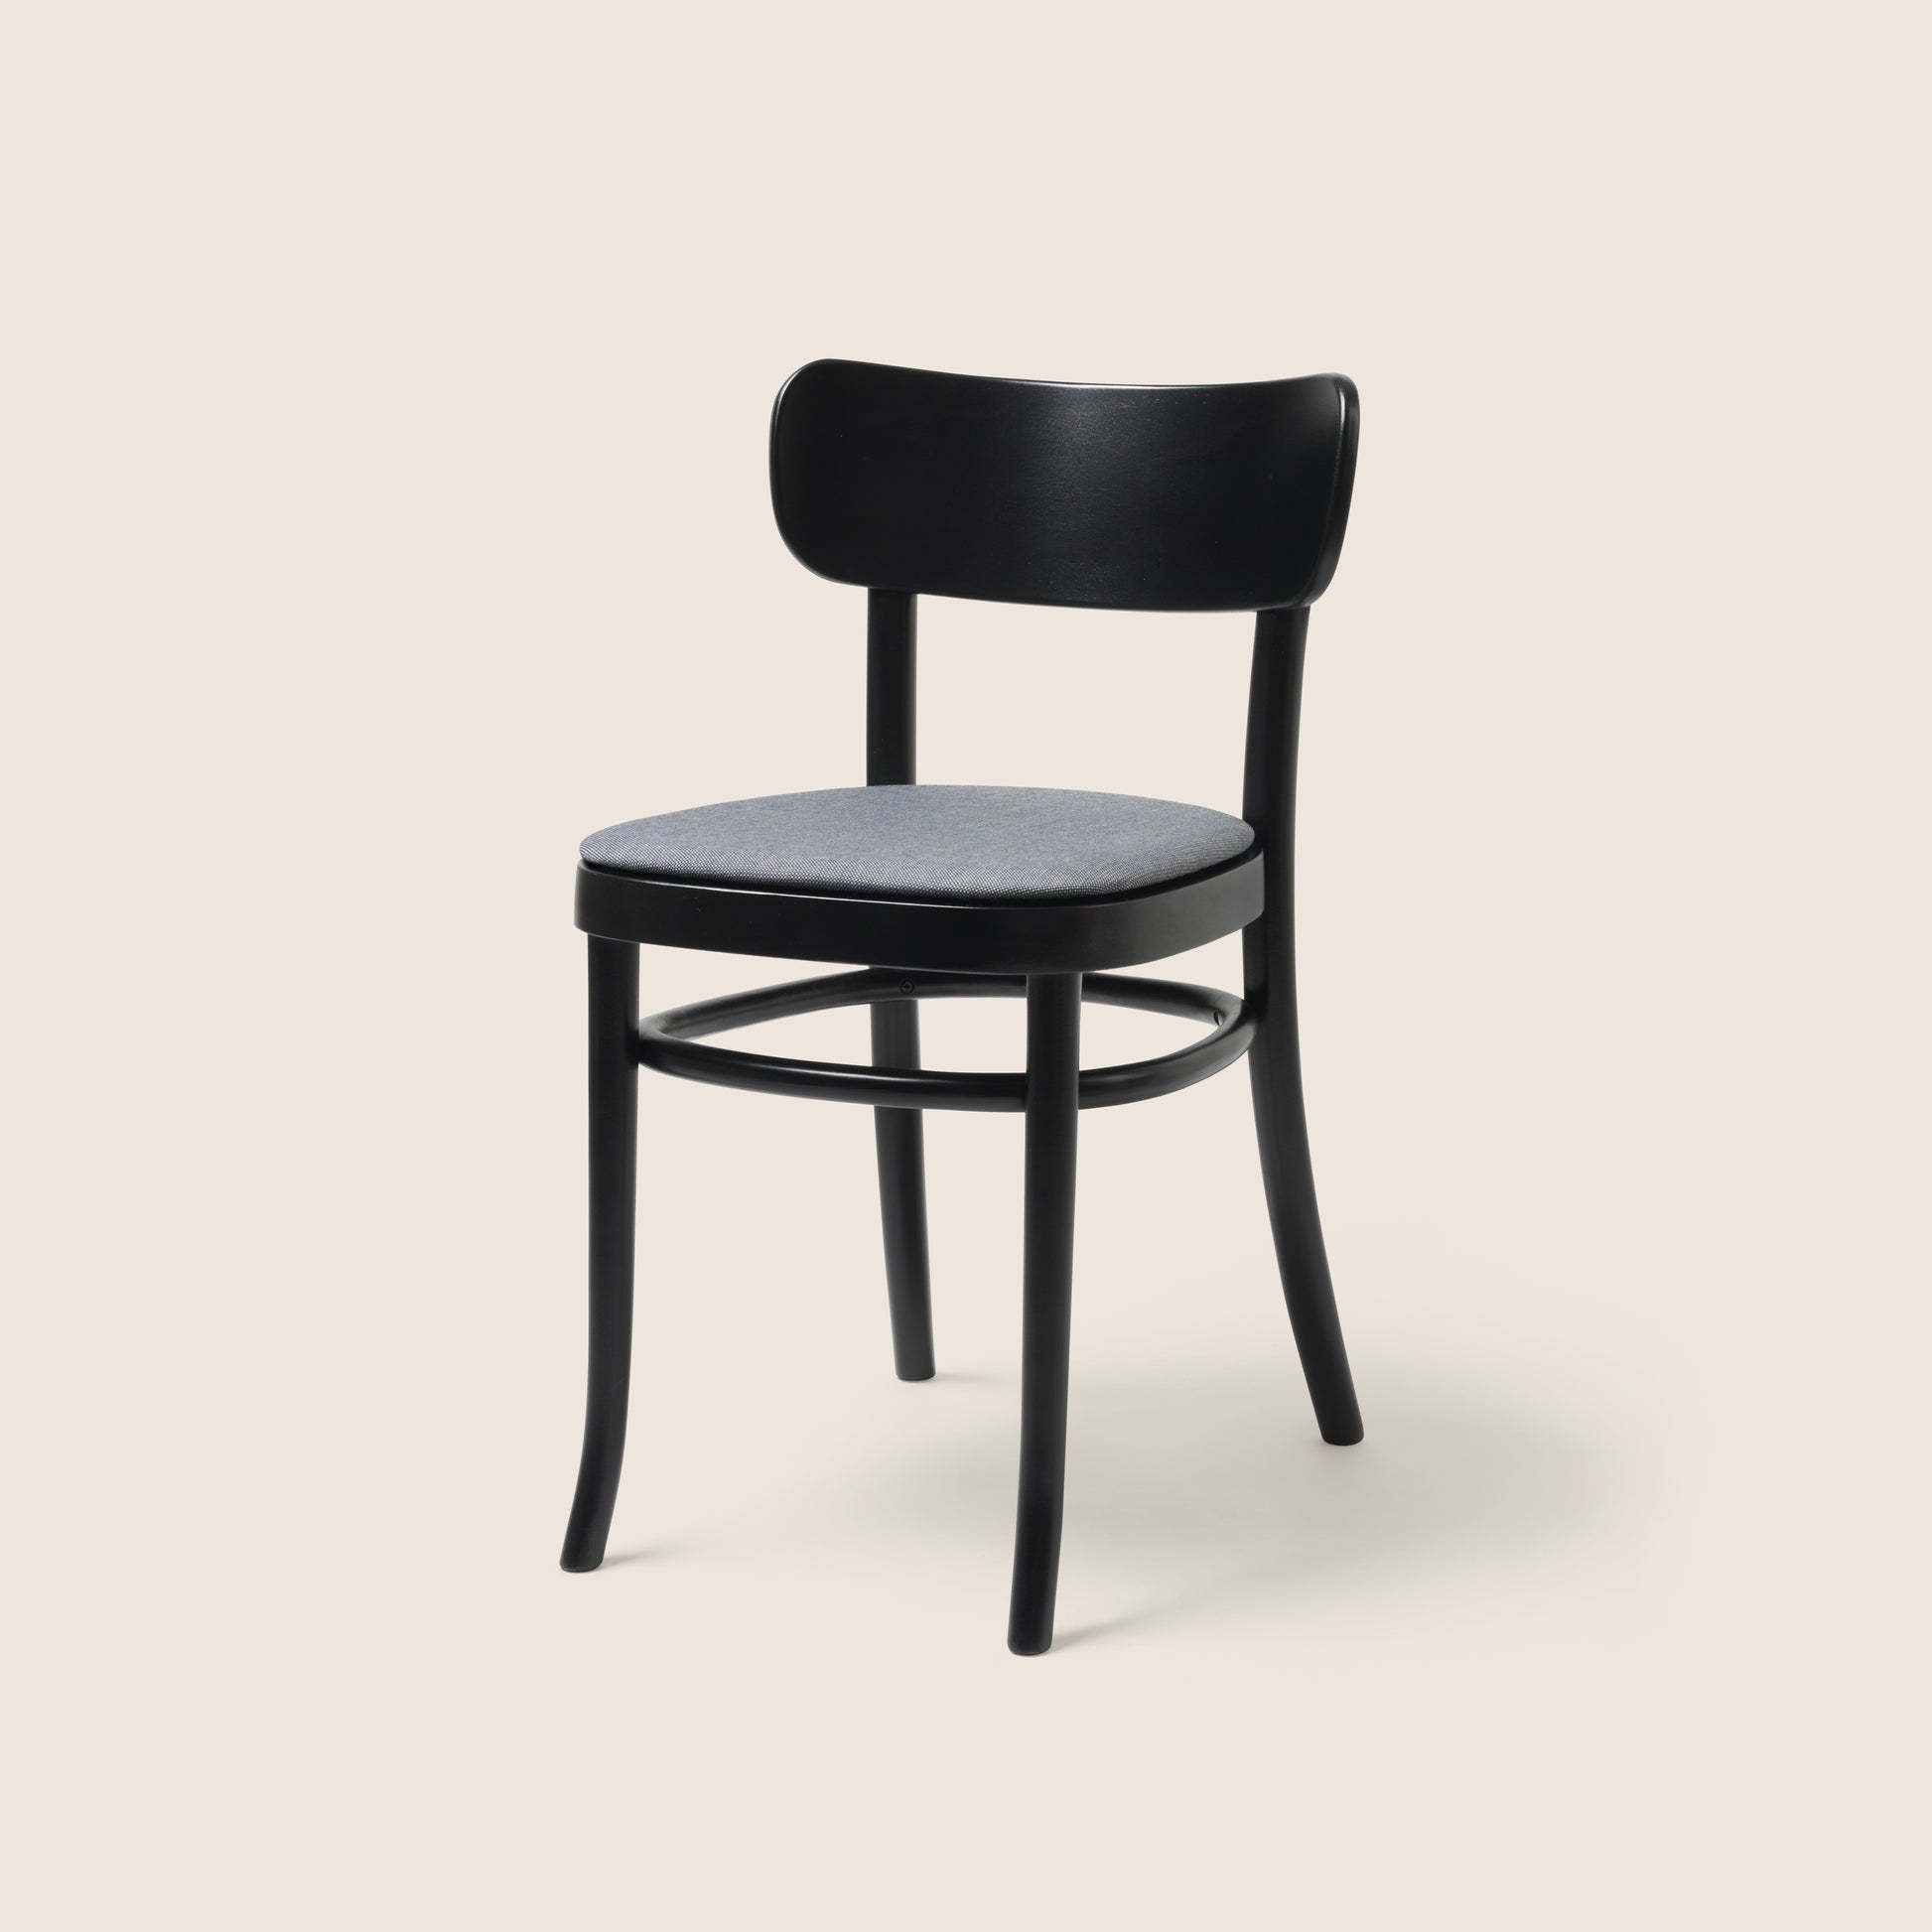 Mazo design MZO Chair black upholstery